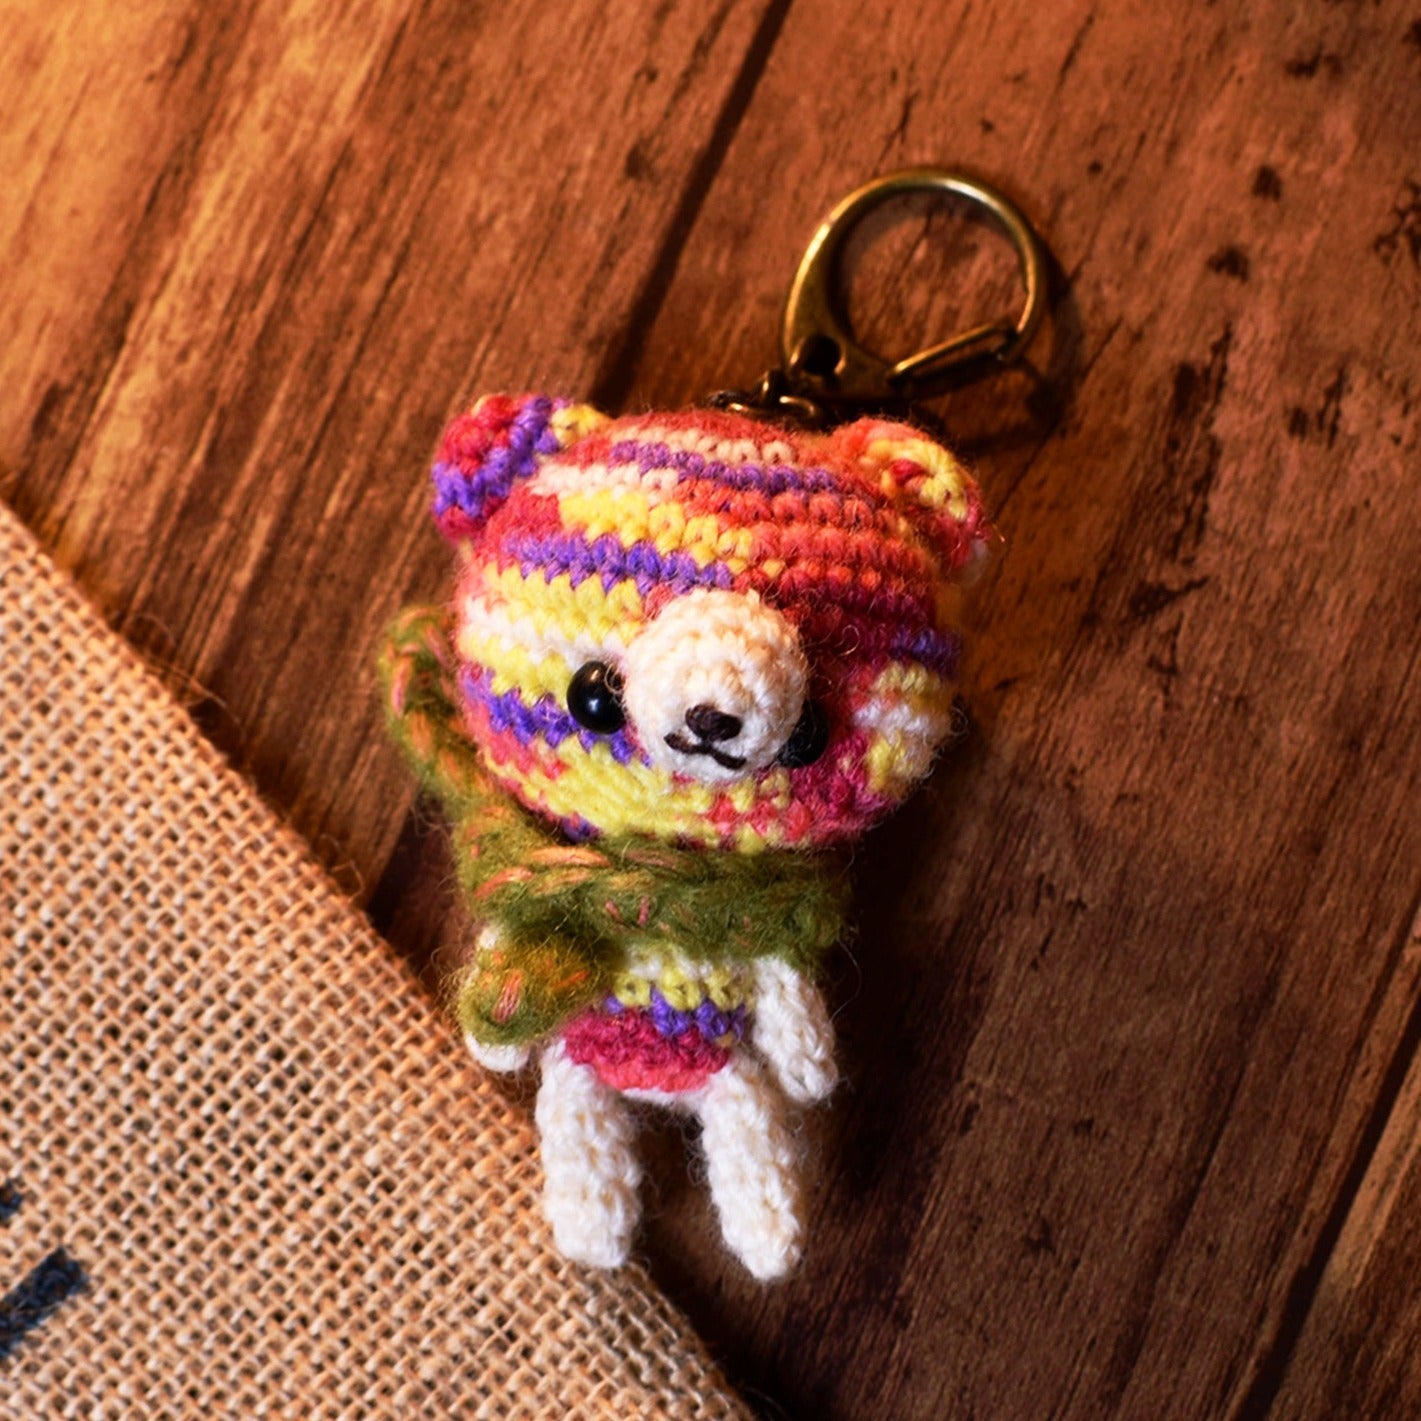 amibox cute colorful knitted teddy bear keychain RARE FIND ZAKKA